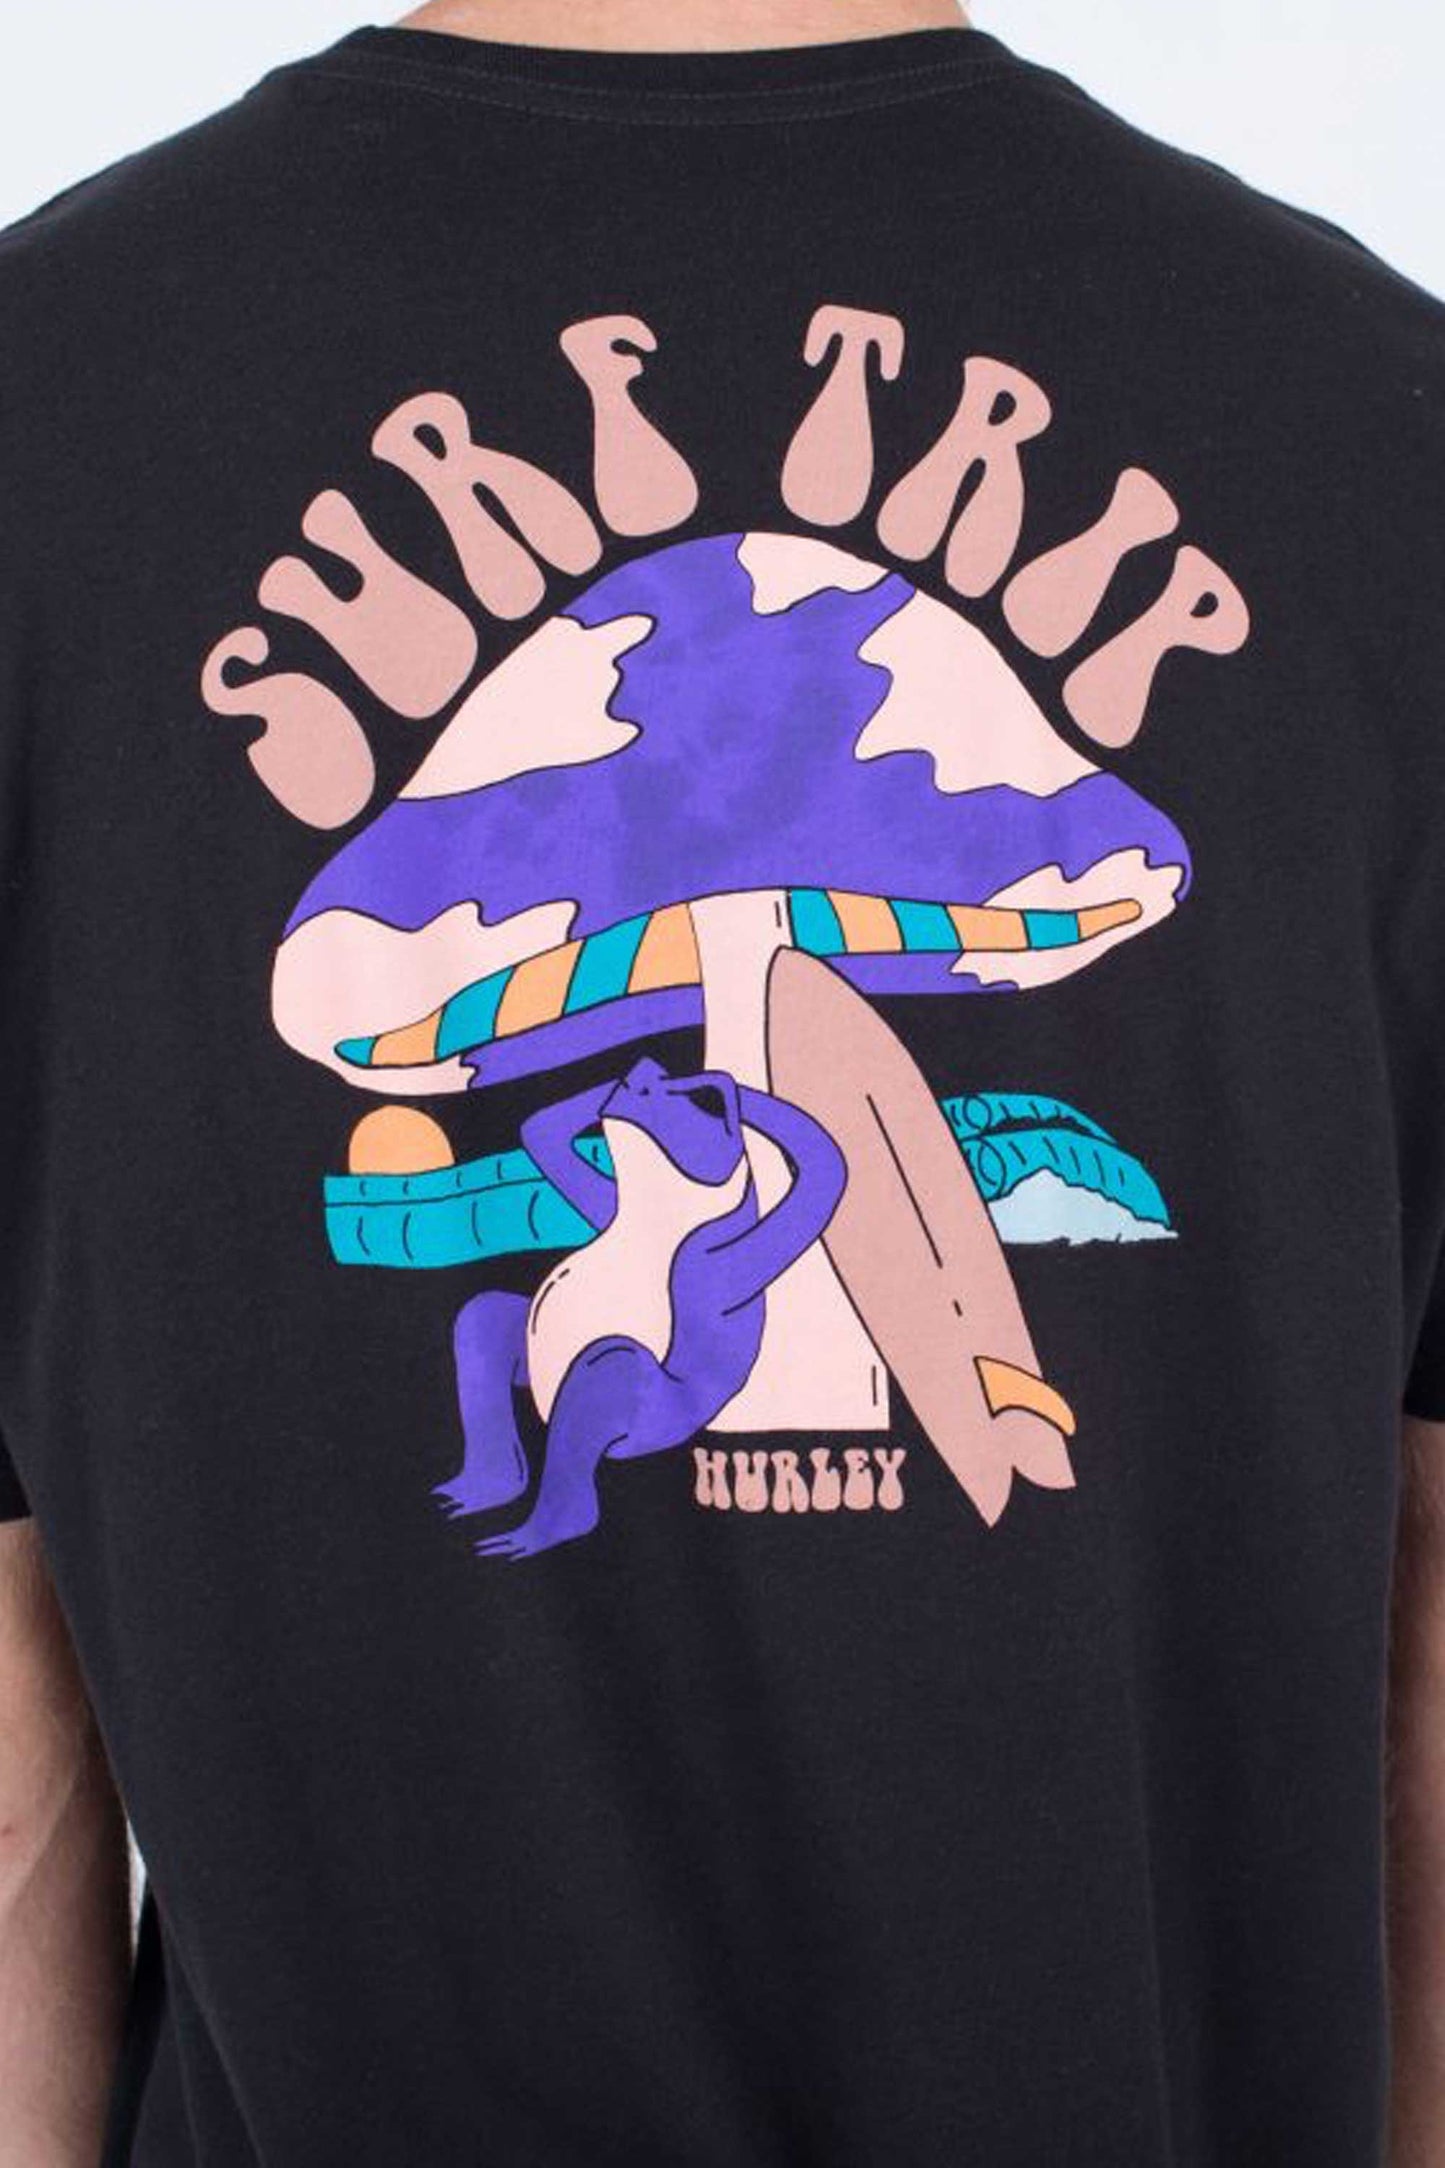 Hurley Lids Surfer T Shirt Unisex Mens L Waves Surfing Beach Graphic